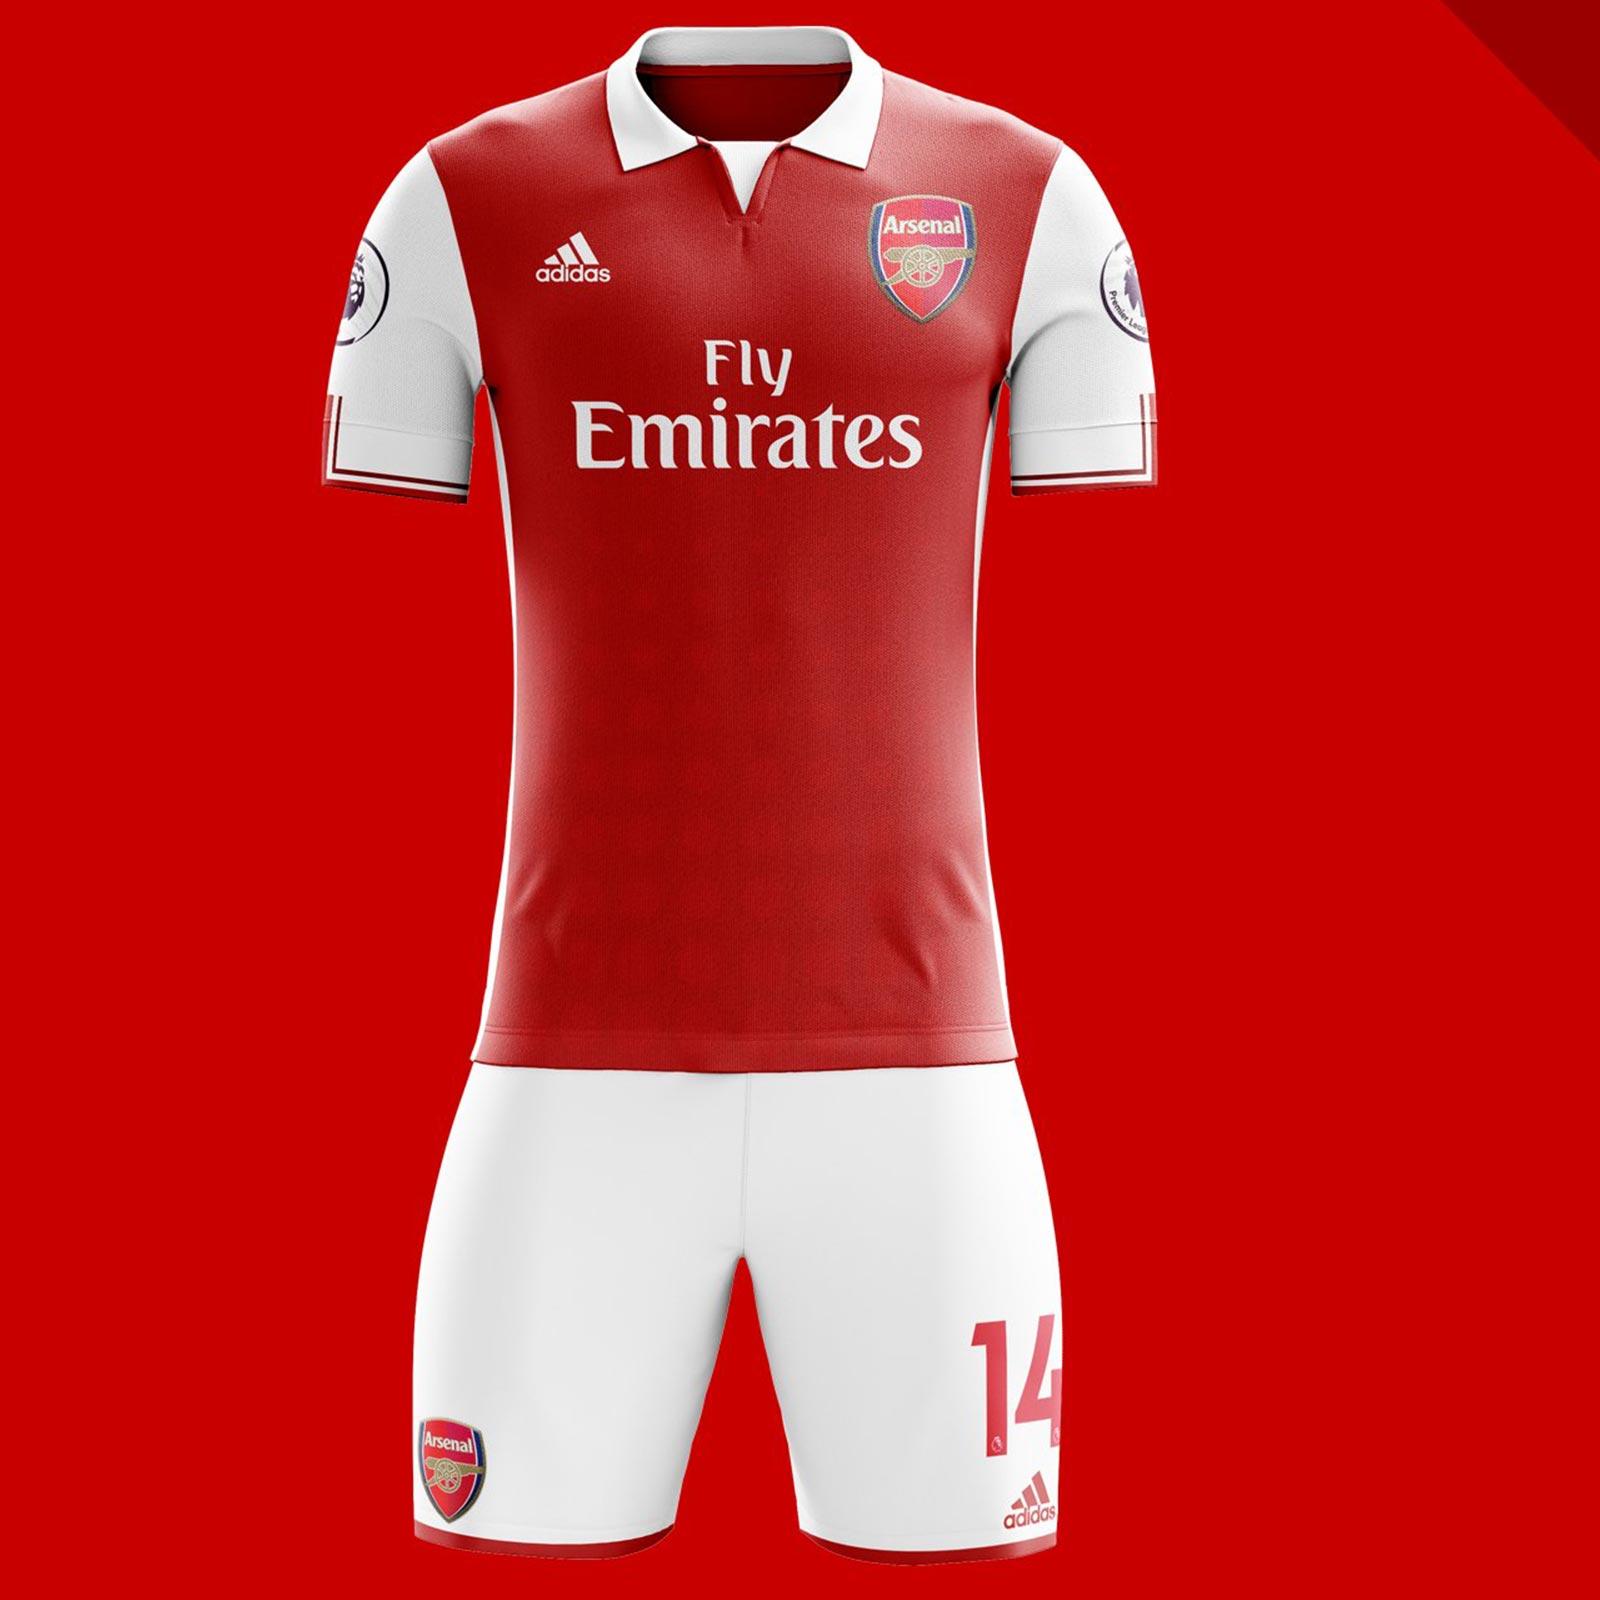 Adidas Arsenal 19 20 Home Away Third Concept Kits 